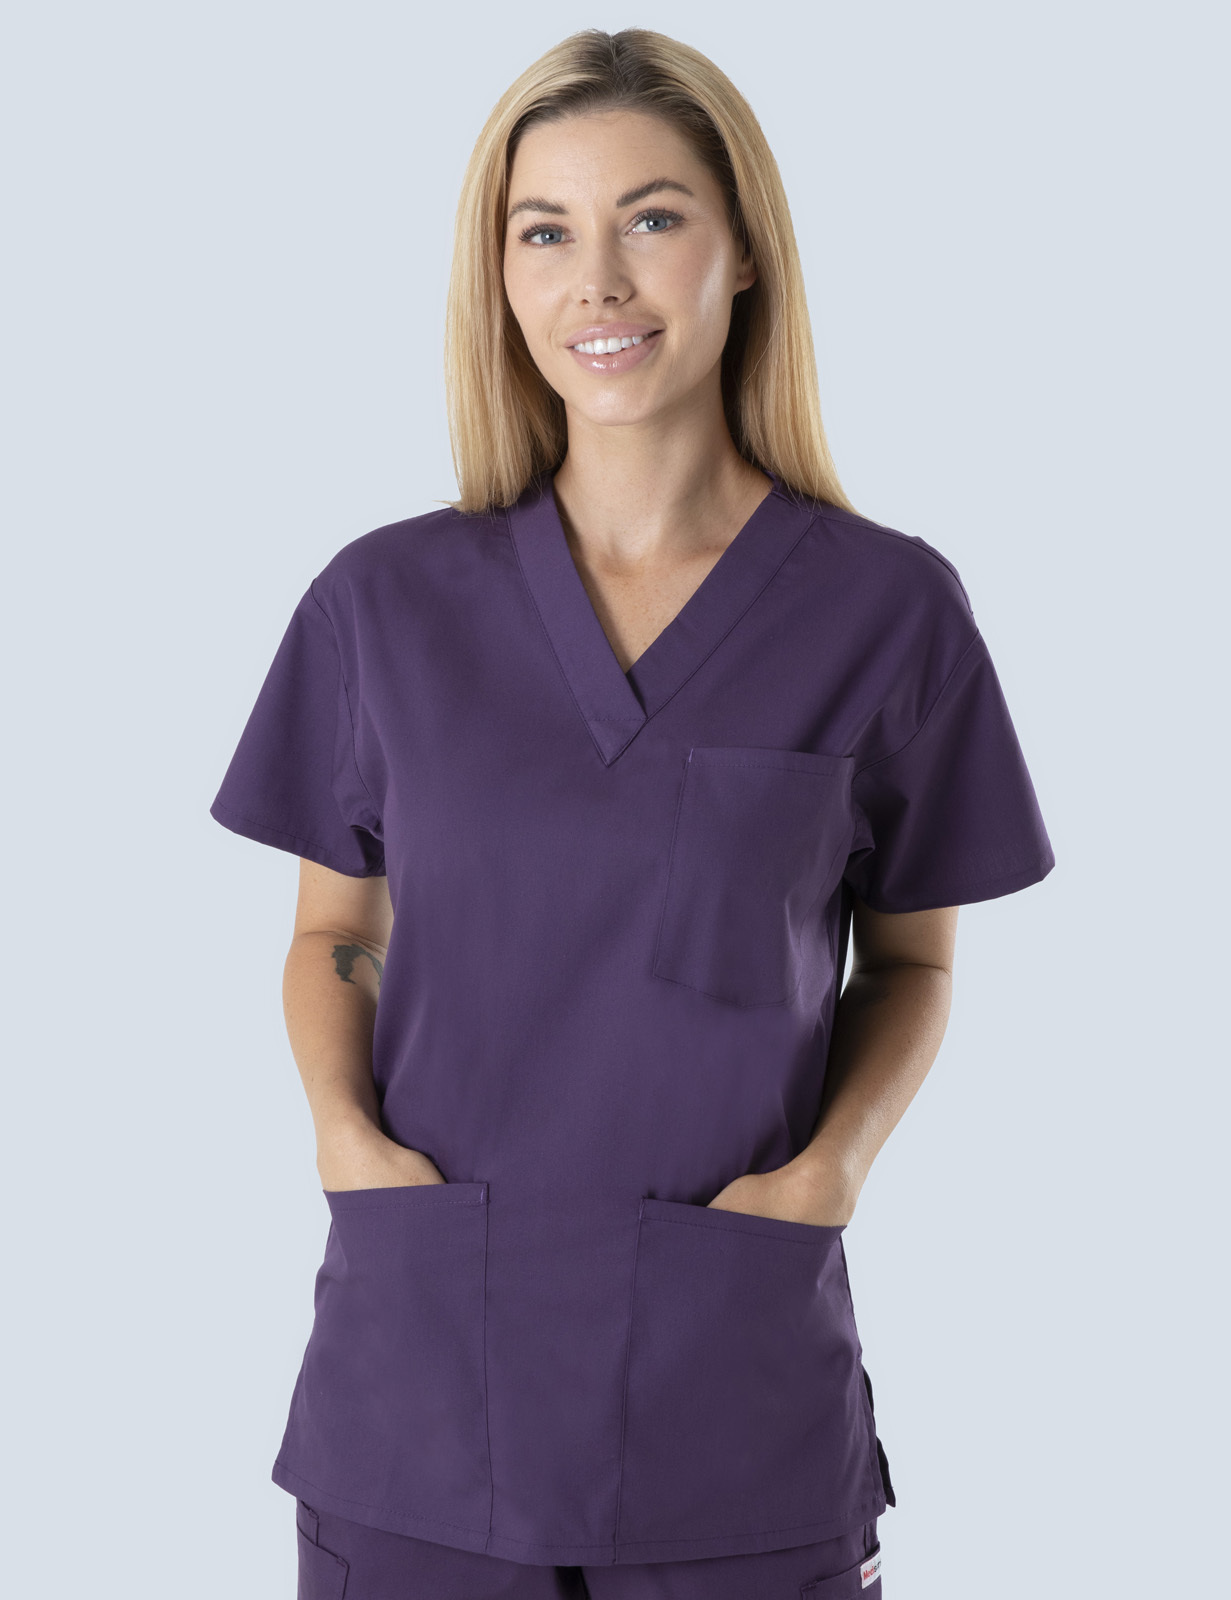 Toowoomba Hospital Pharmacist Interns Uniform Set Bundle (4 Pocket Top and Cargo Pants in Aubergine incl Logos)